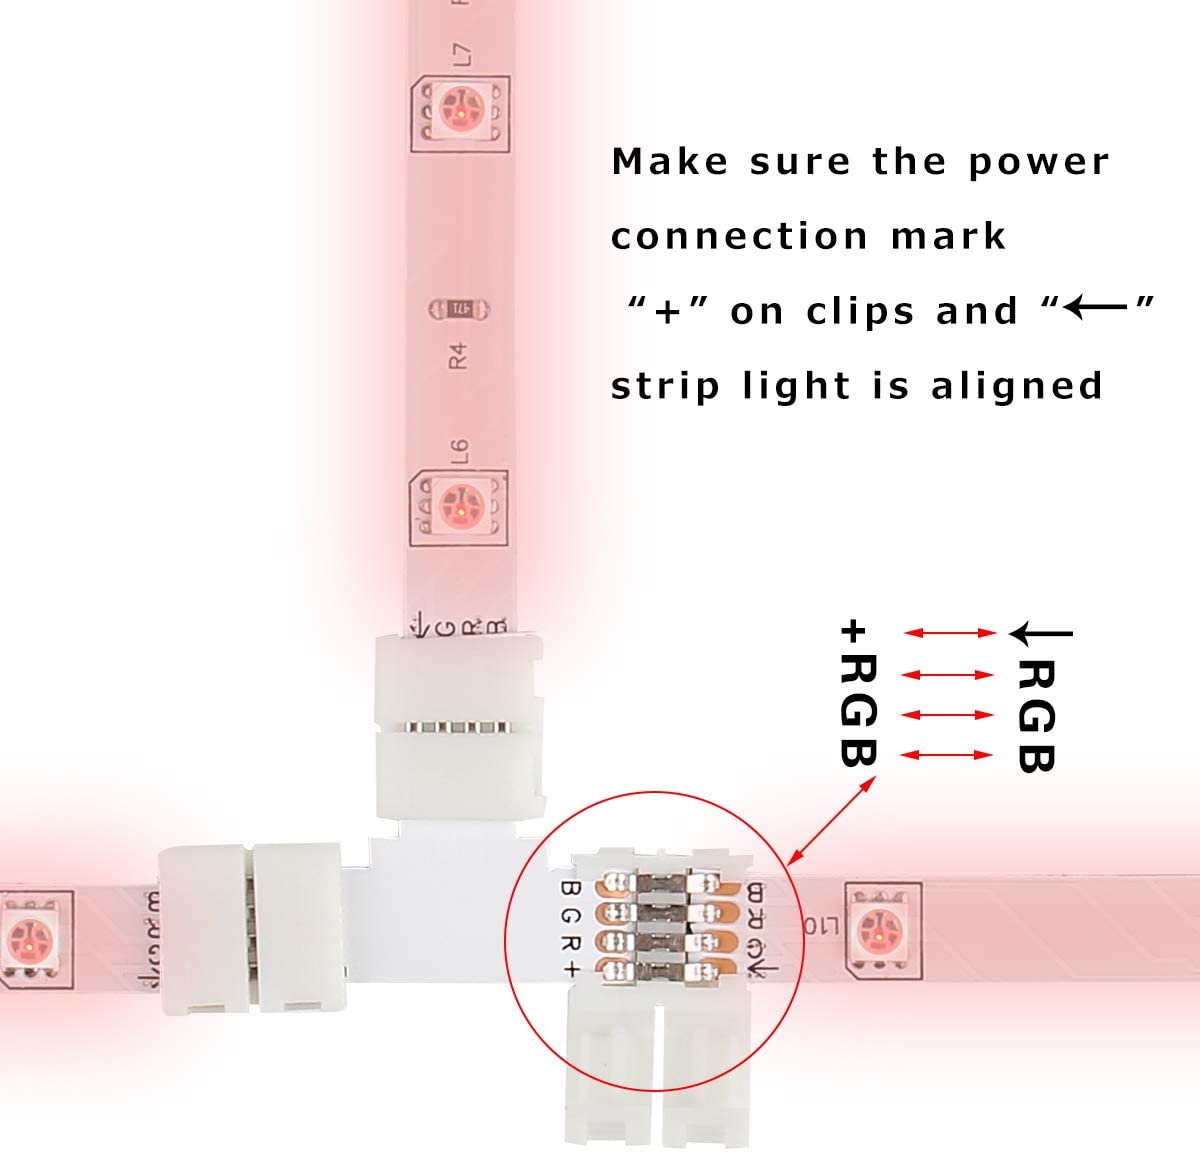 LED Strip Accessories 5pcs L Shape PCB RGB Connectors 4 pin 10mm - ATOM LED